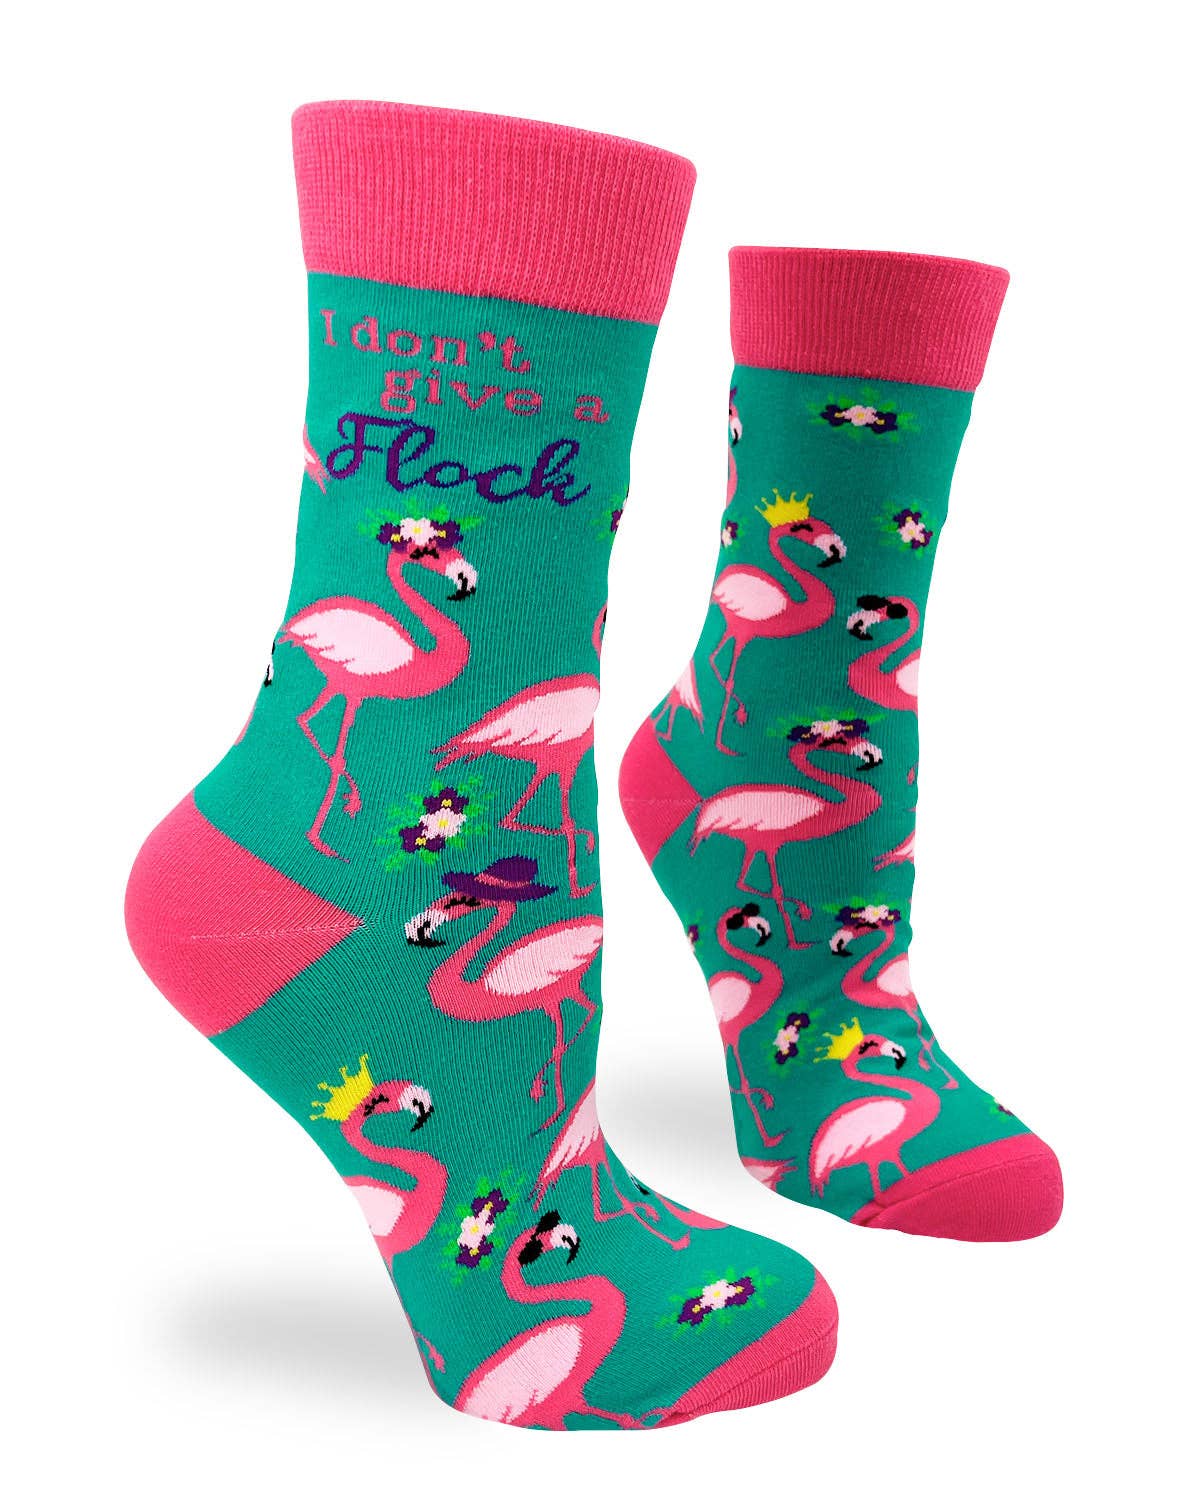 Women's "I Don't Give a Flock" Flamingo Socks